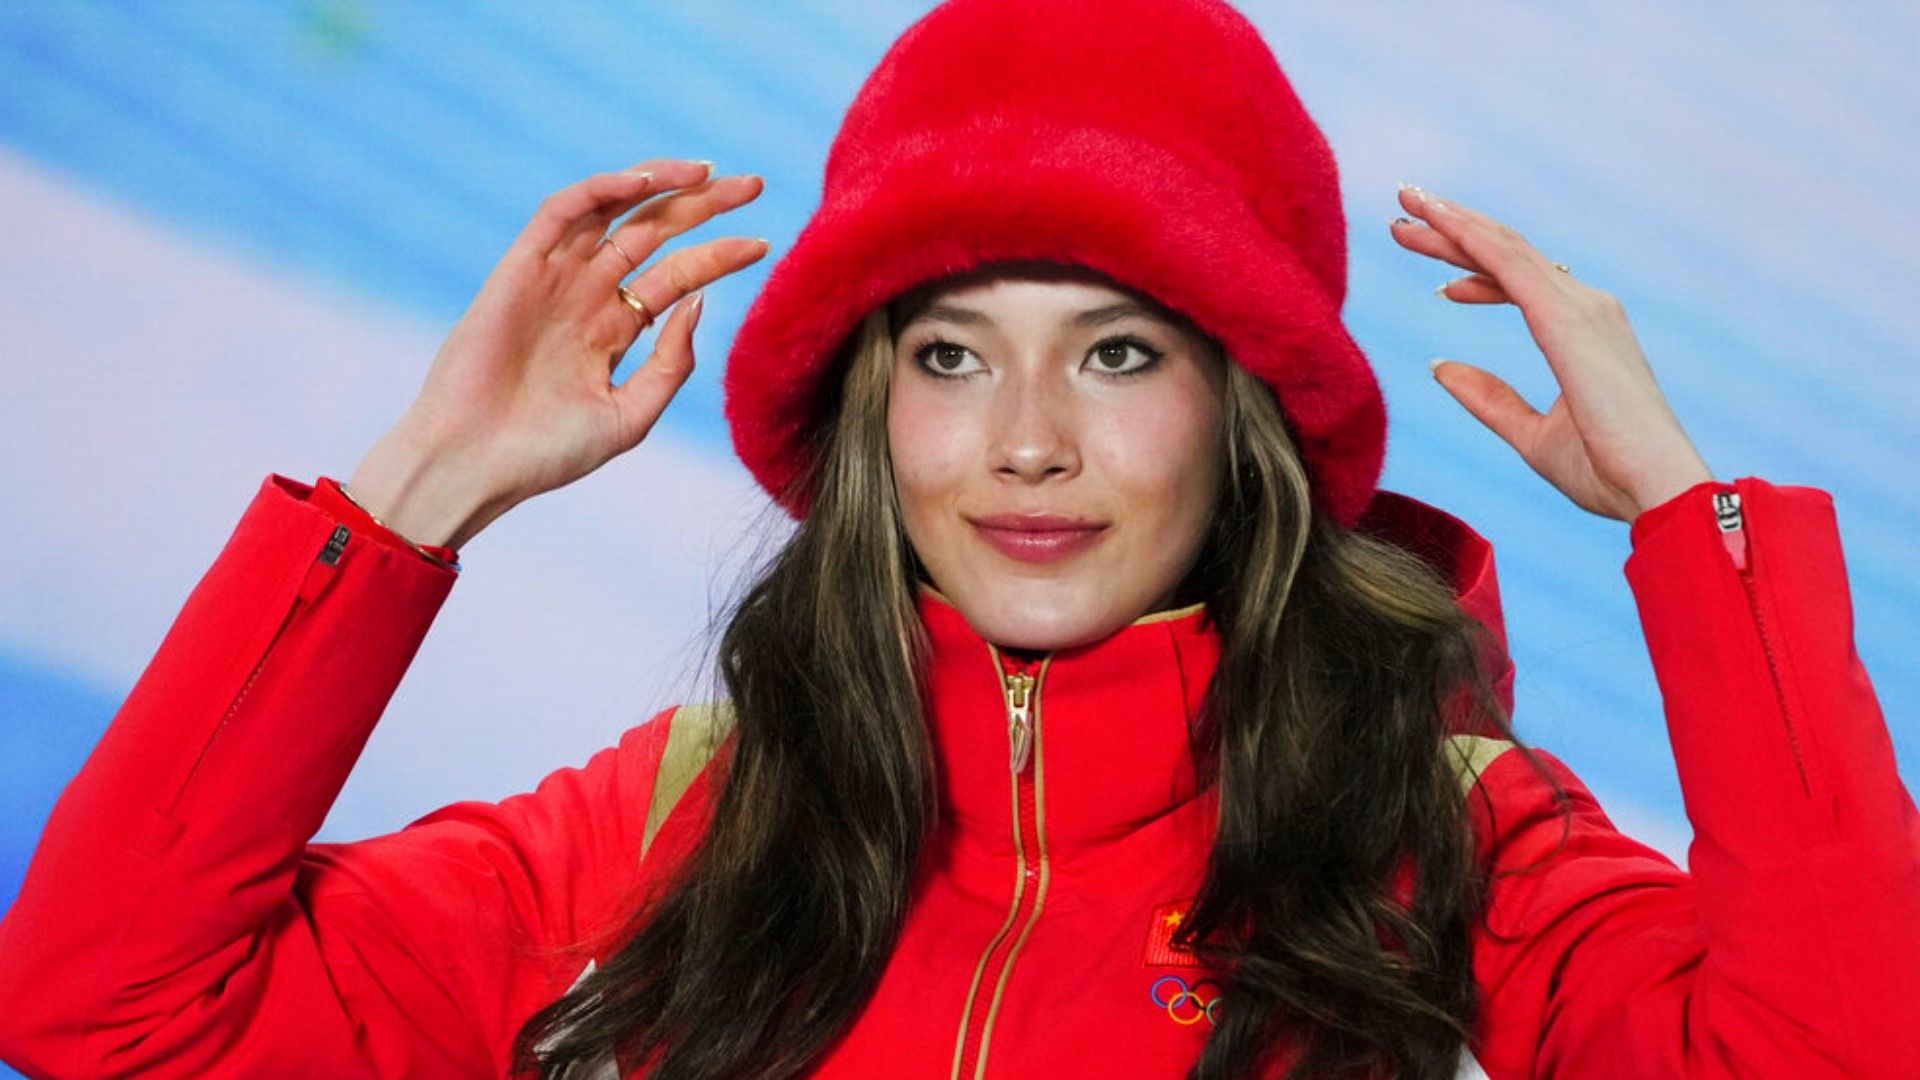 Gallery: Skier Eileen Gu Earns Millions From Fashion Endorsements - Caixin  Global